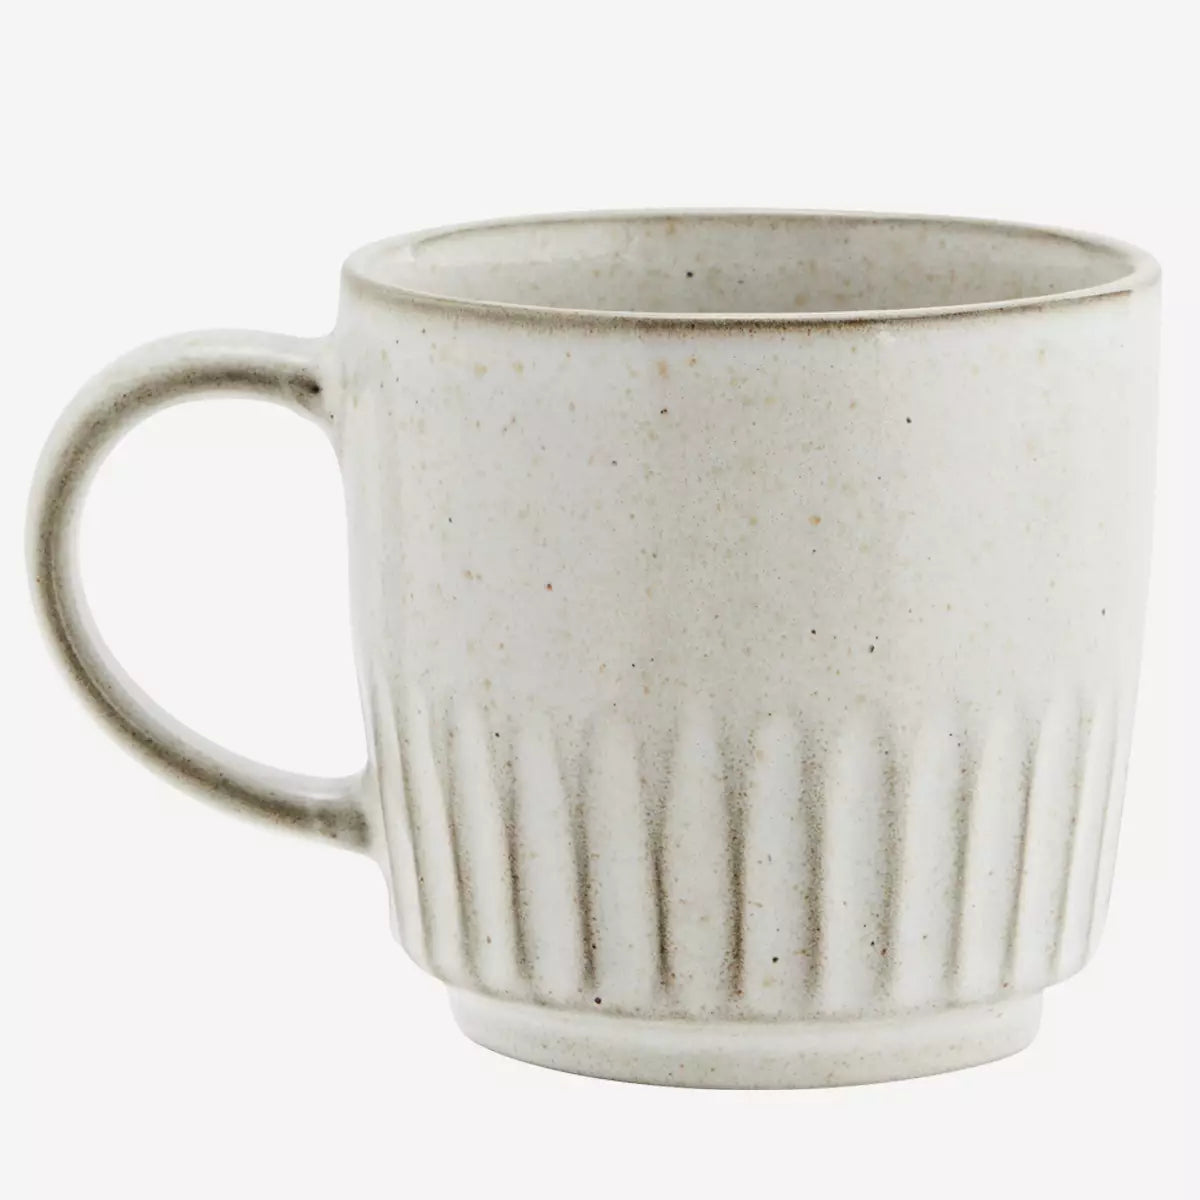 Stoneware Ceramic Mug with Grooves